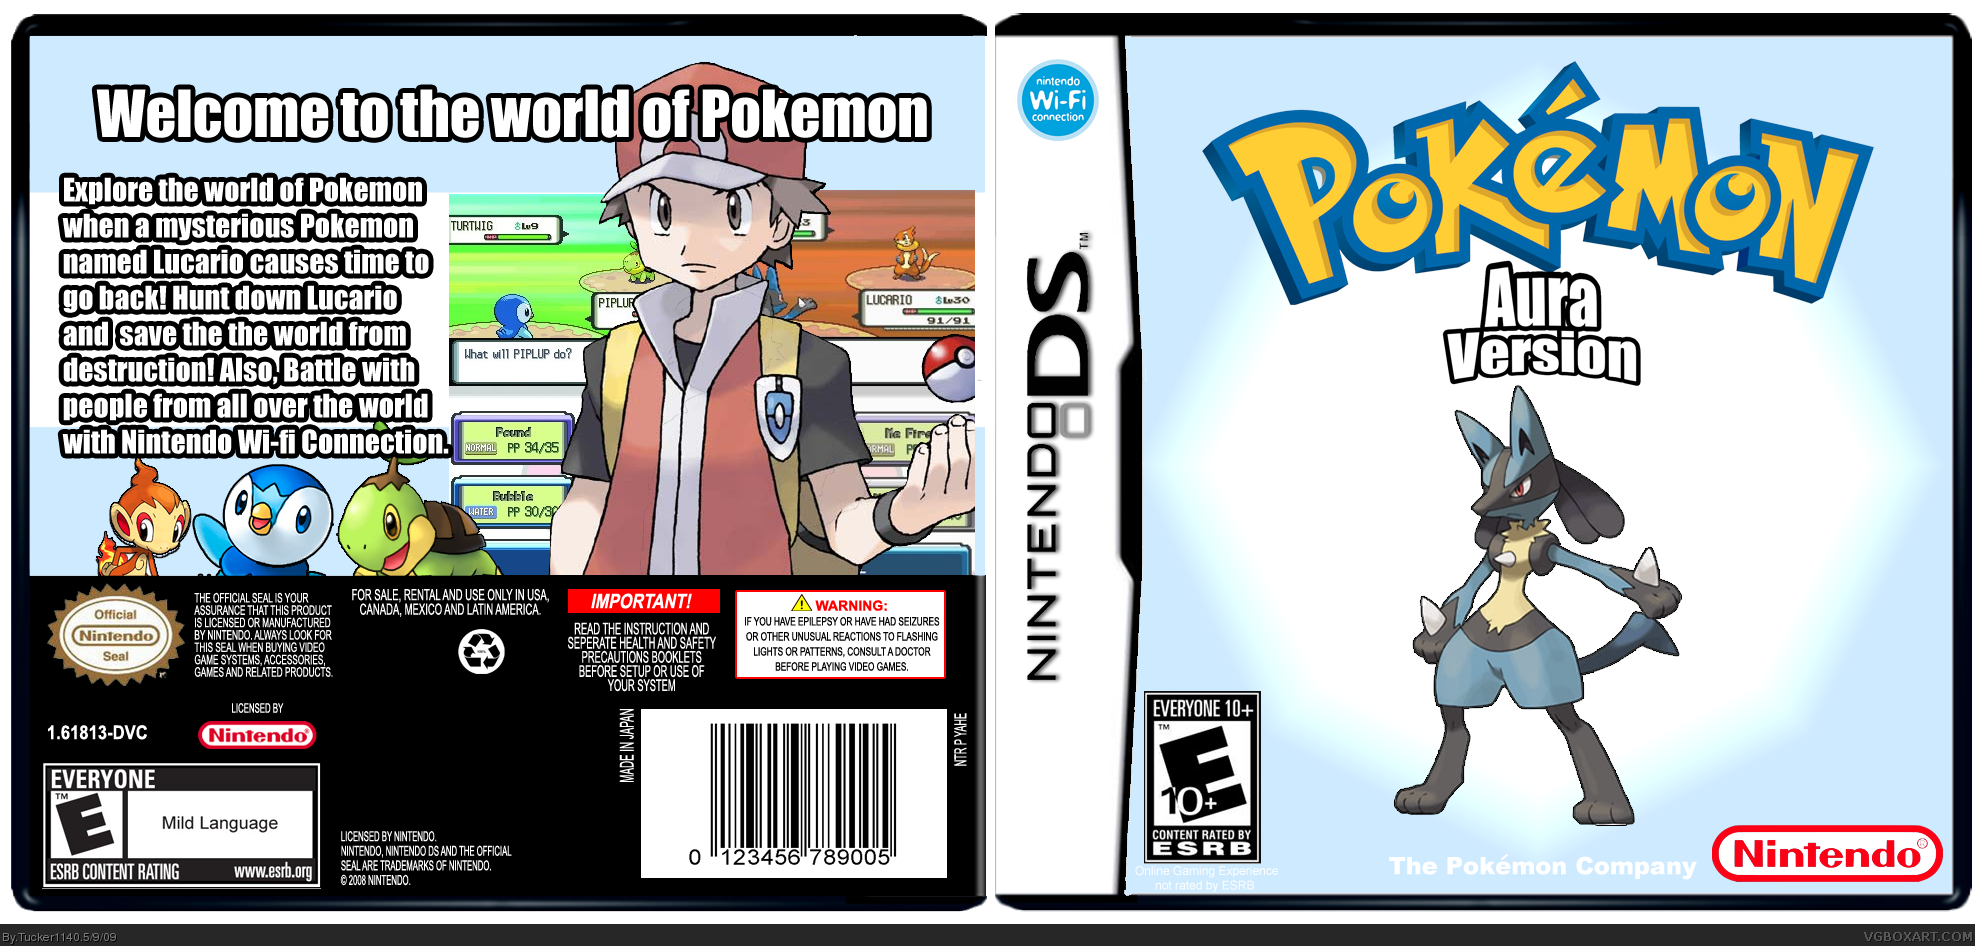 Pokemon: Aura Version box cover